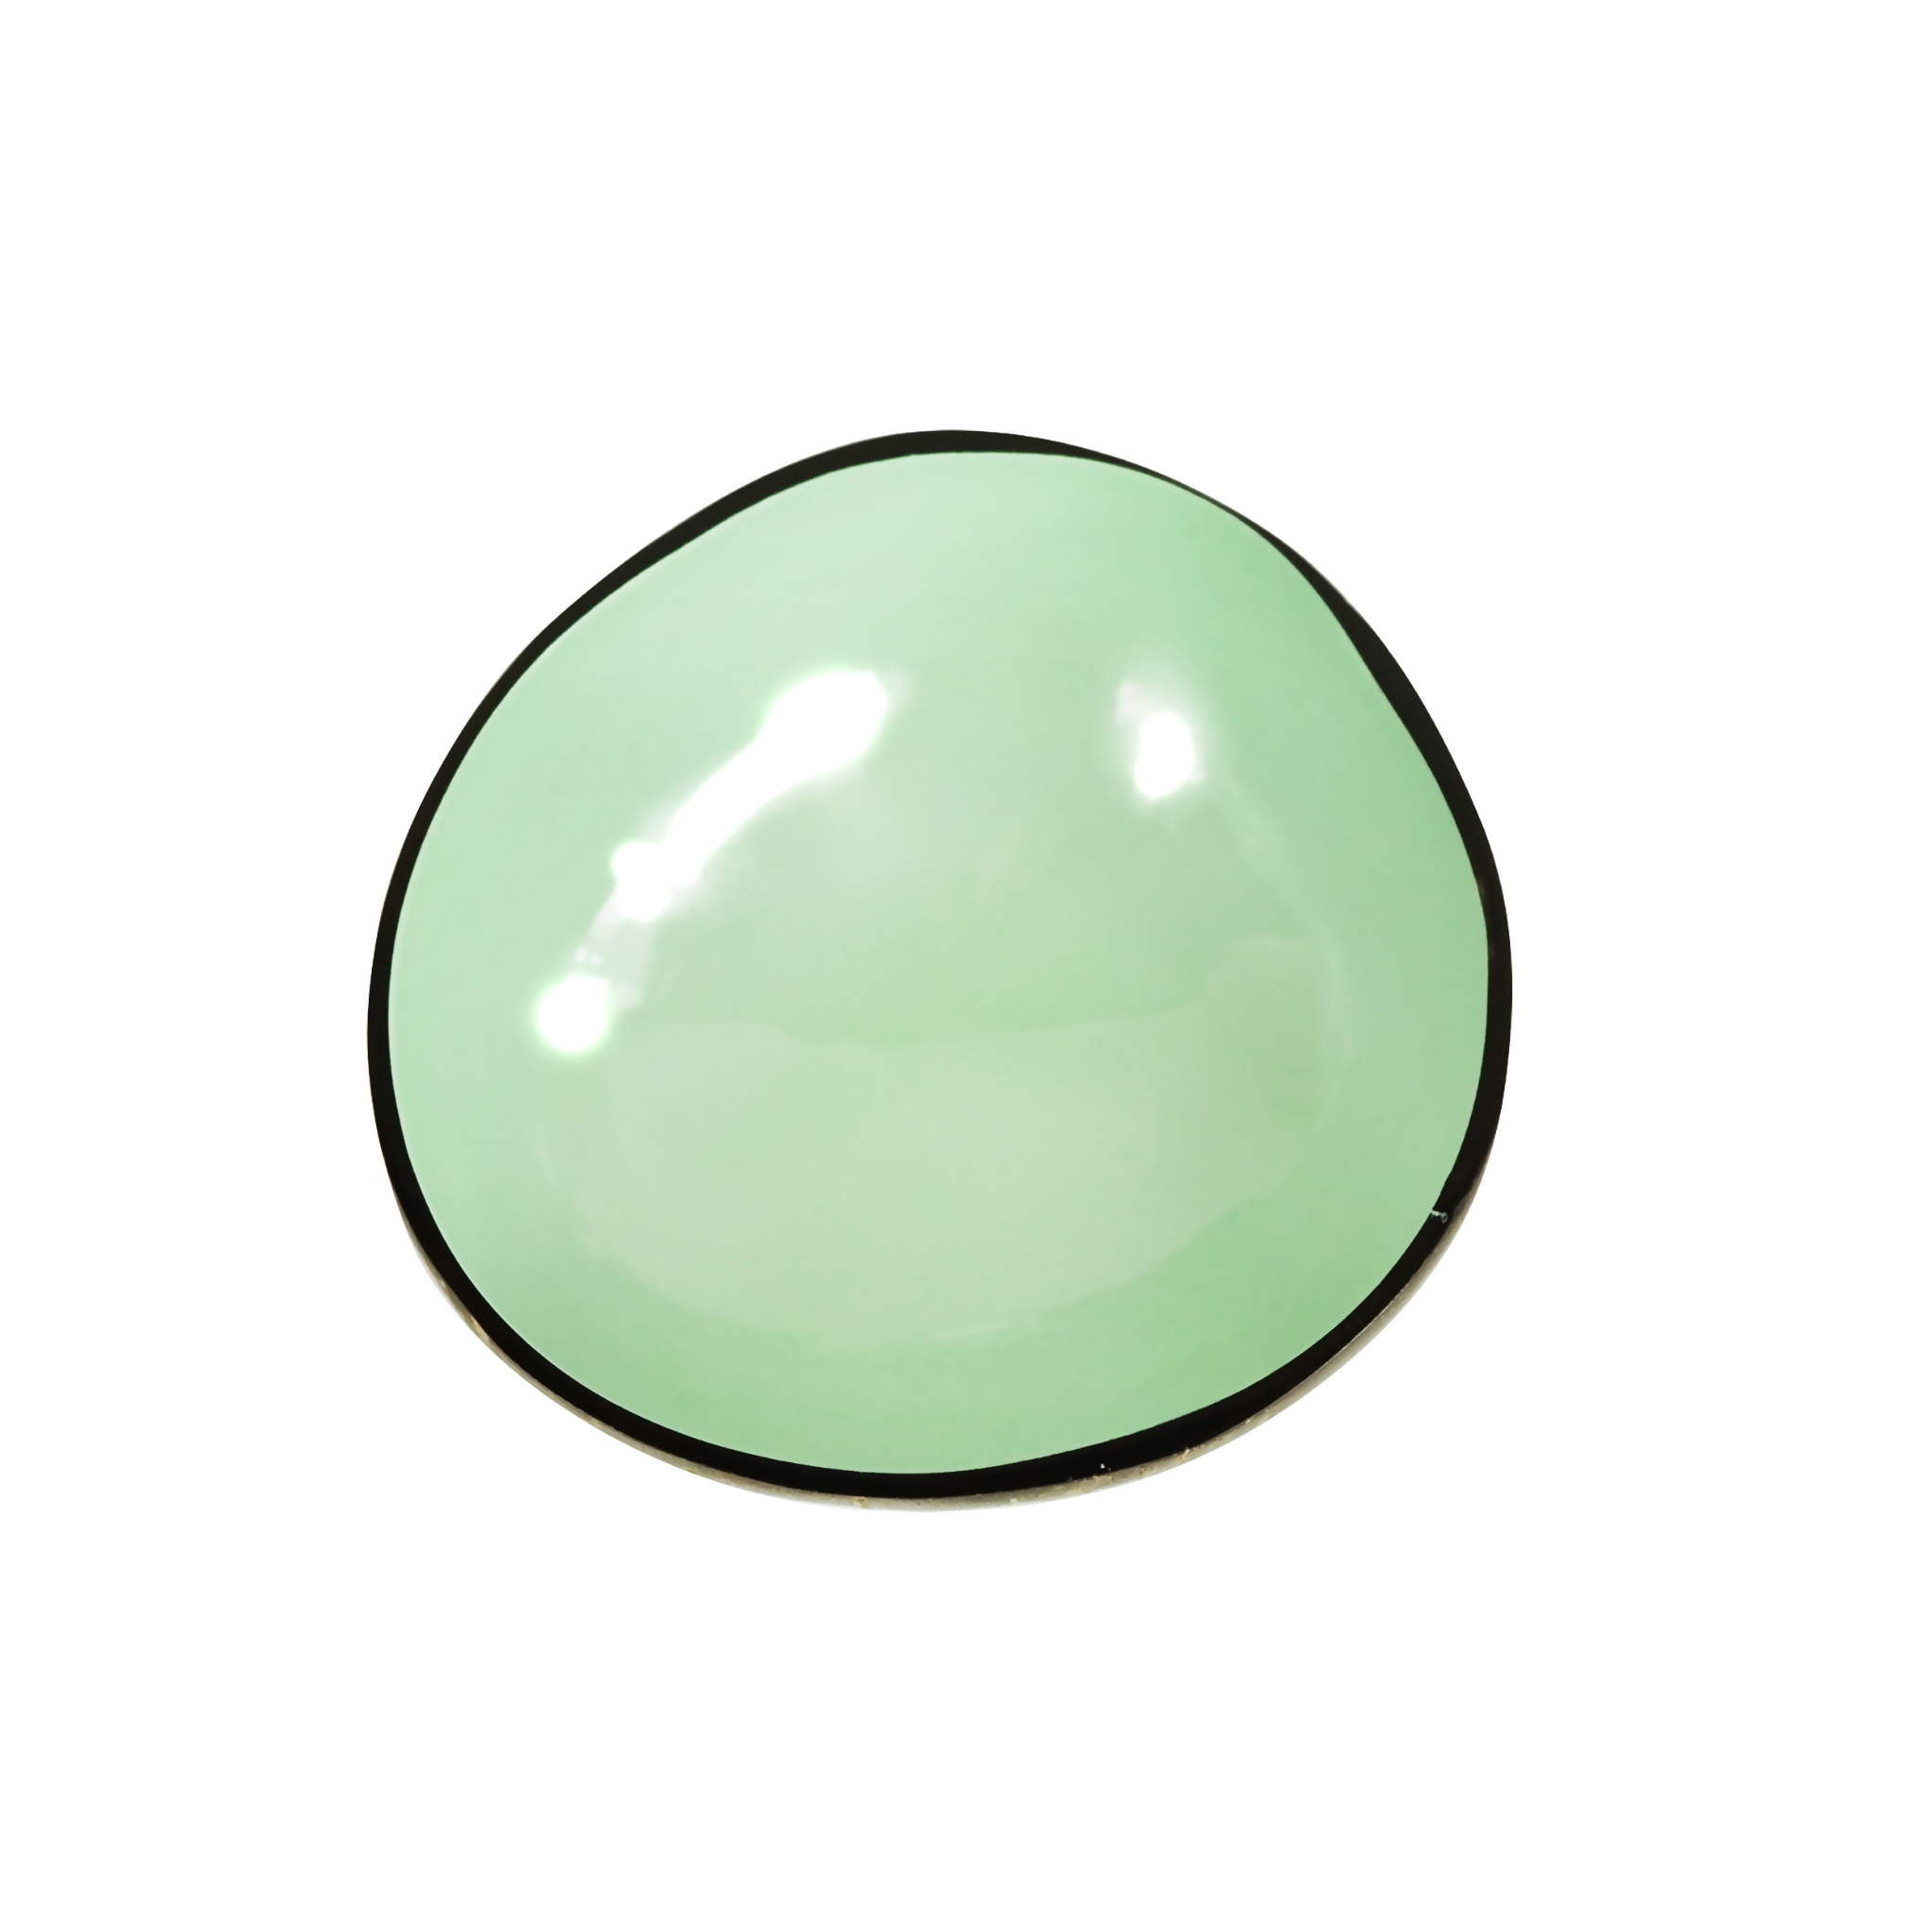  Lacquer Coco Bowl - Light Green 